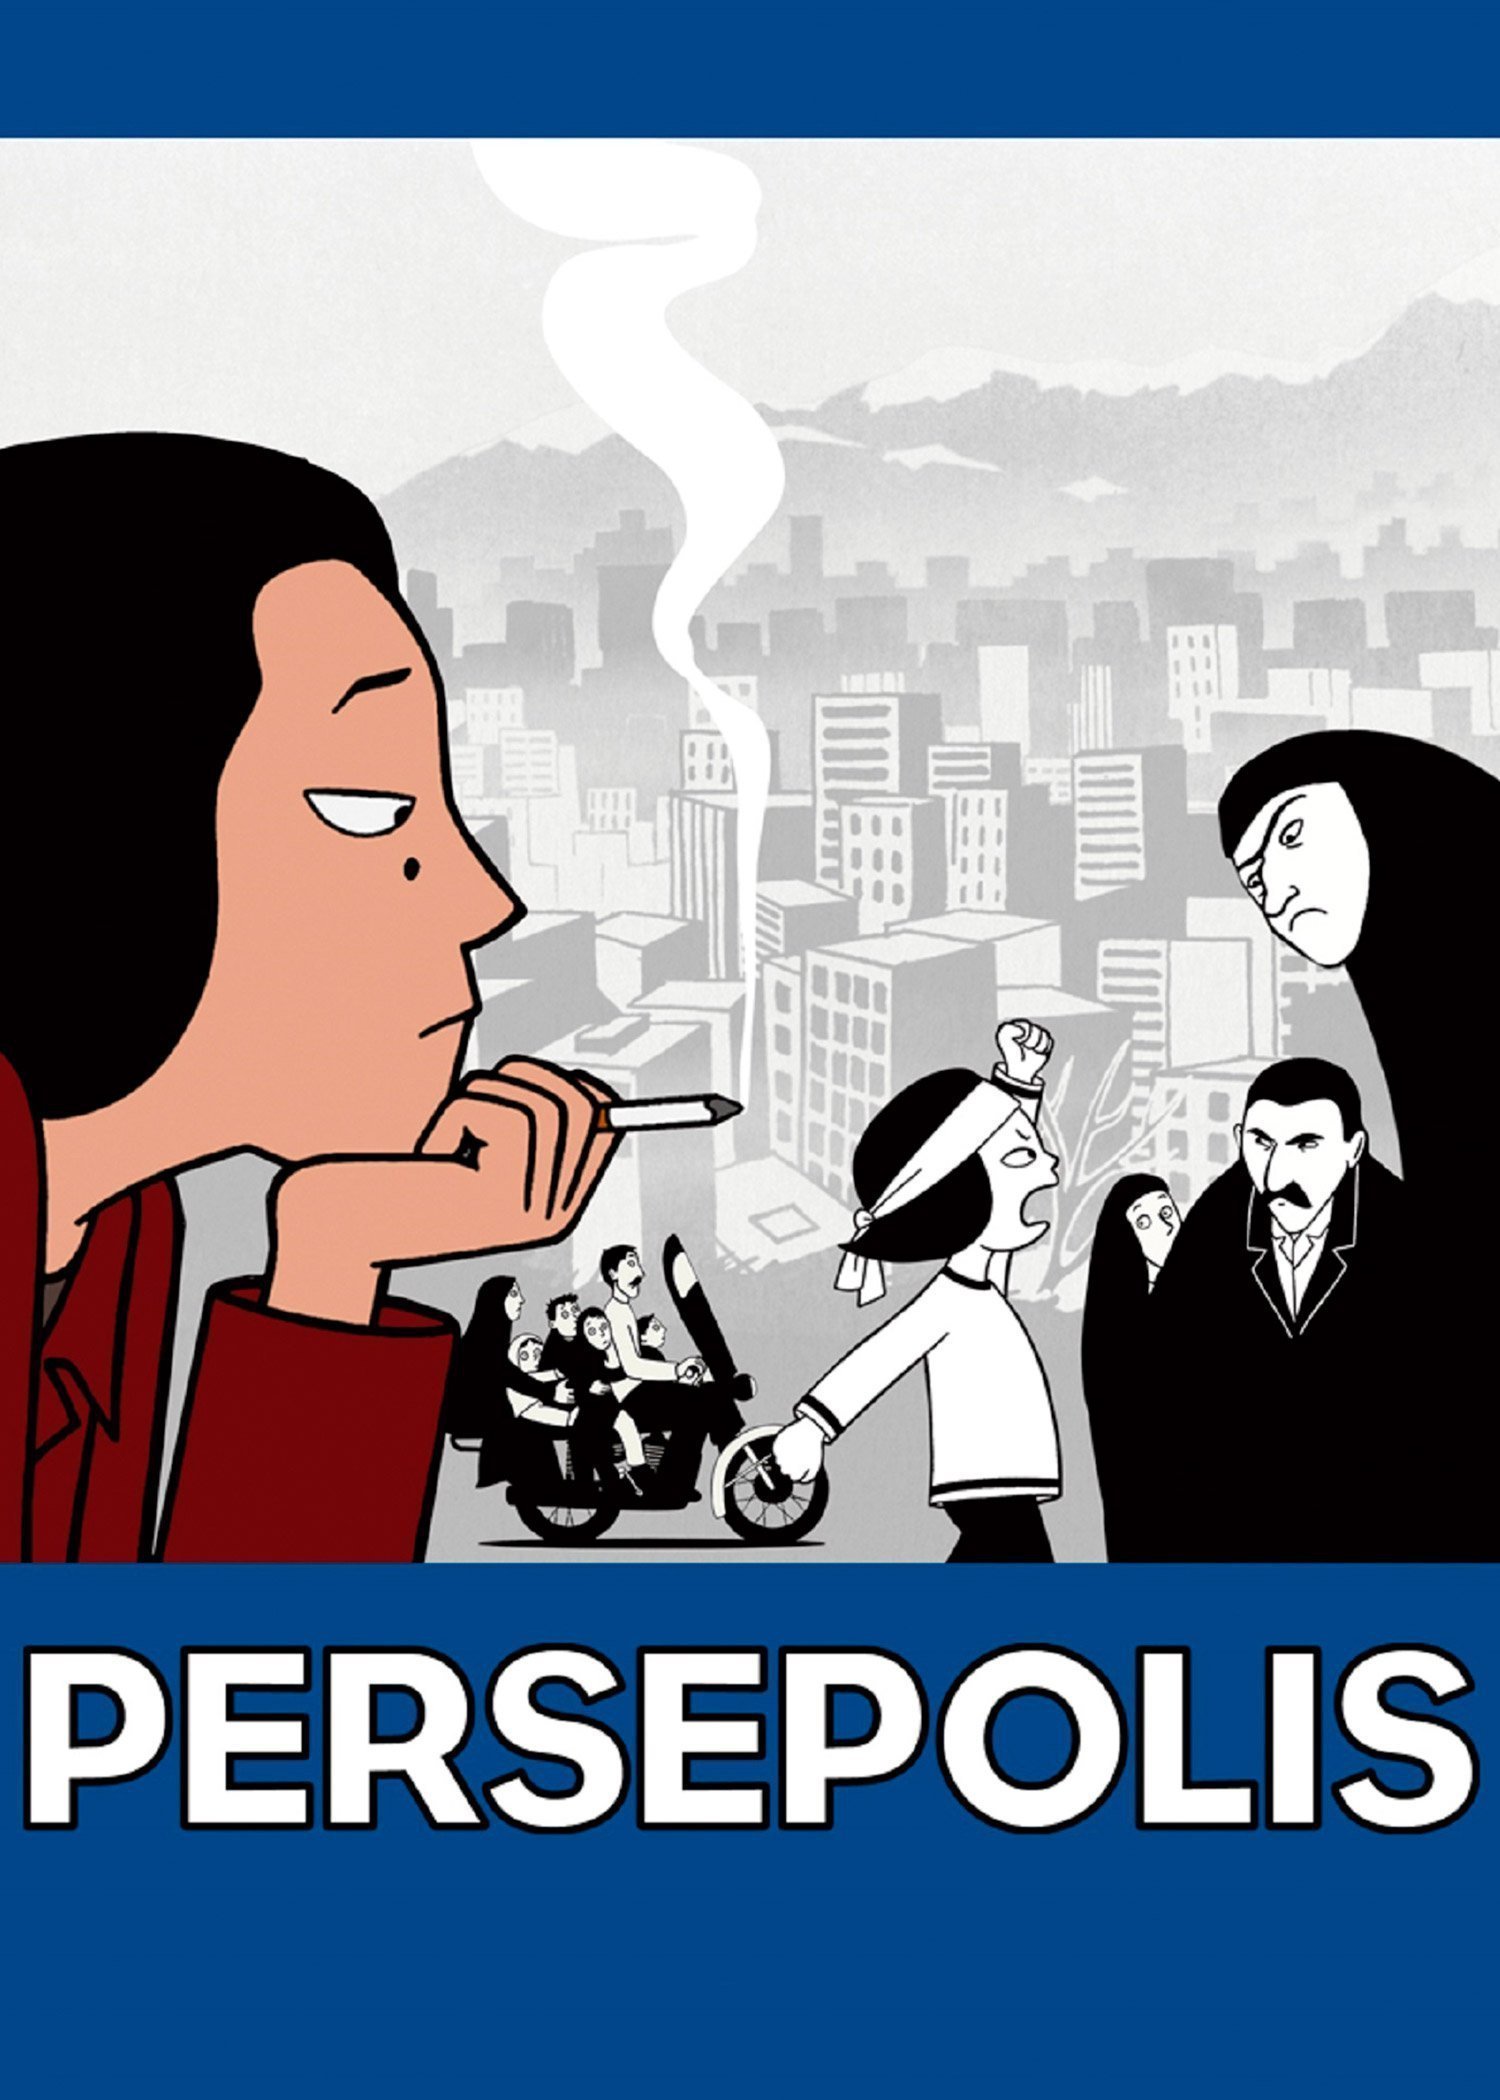 Pennsylvania School District pulls Persepolis over parent complaints